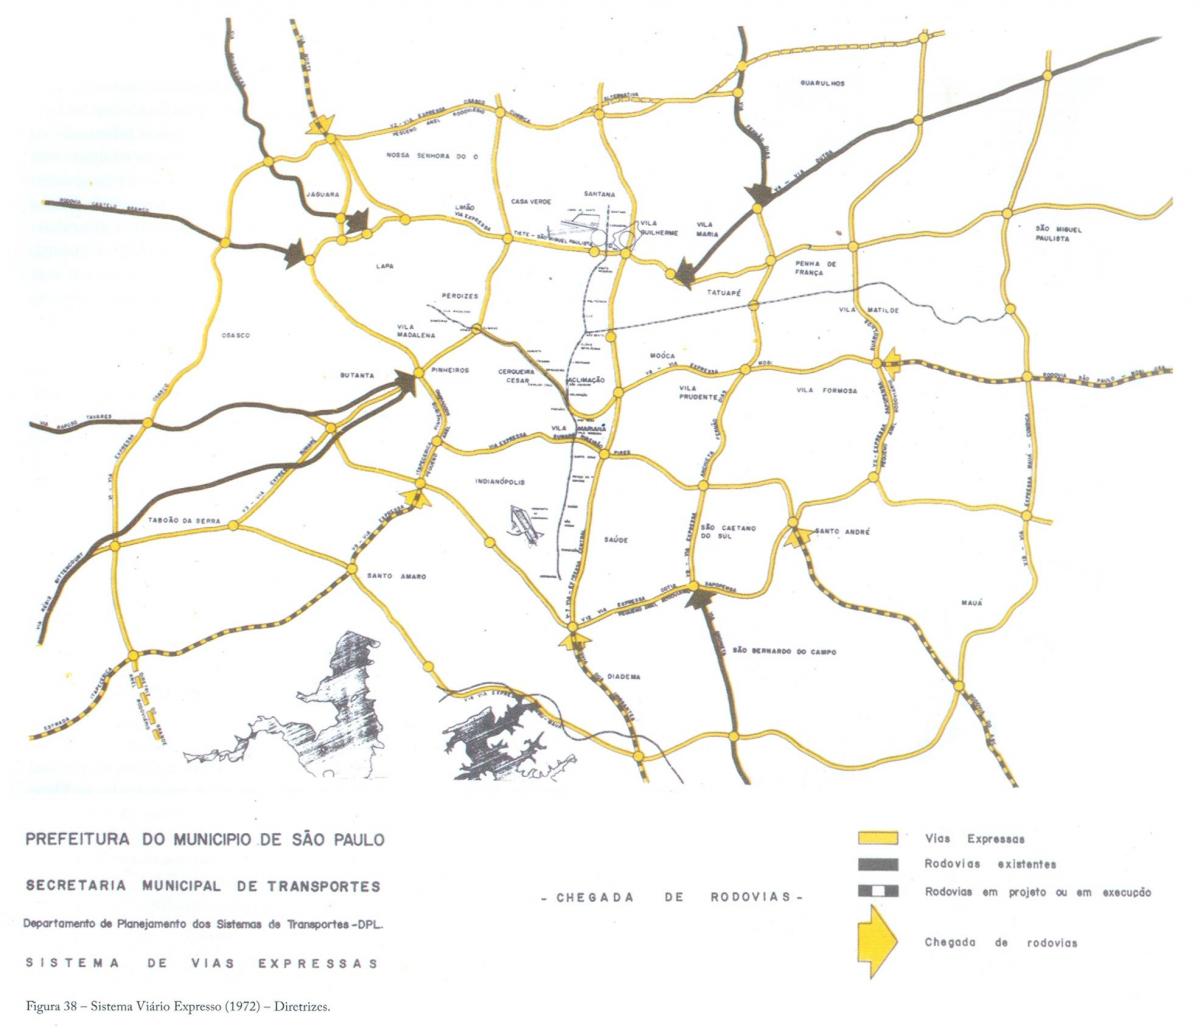 نقشه از سن پائولو بیان خطوط